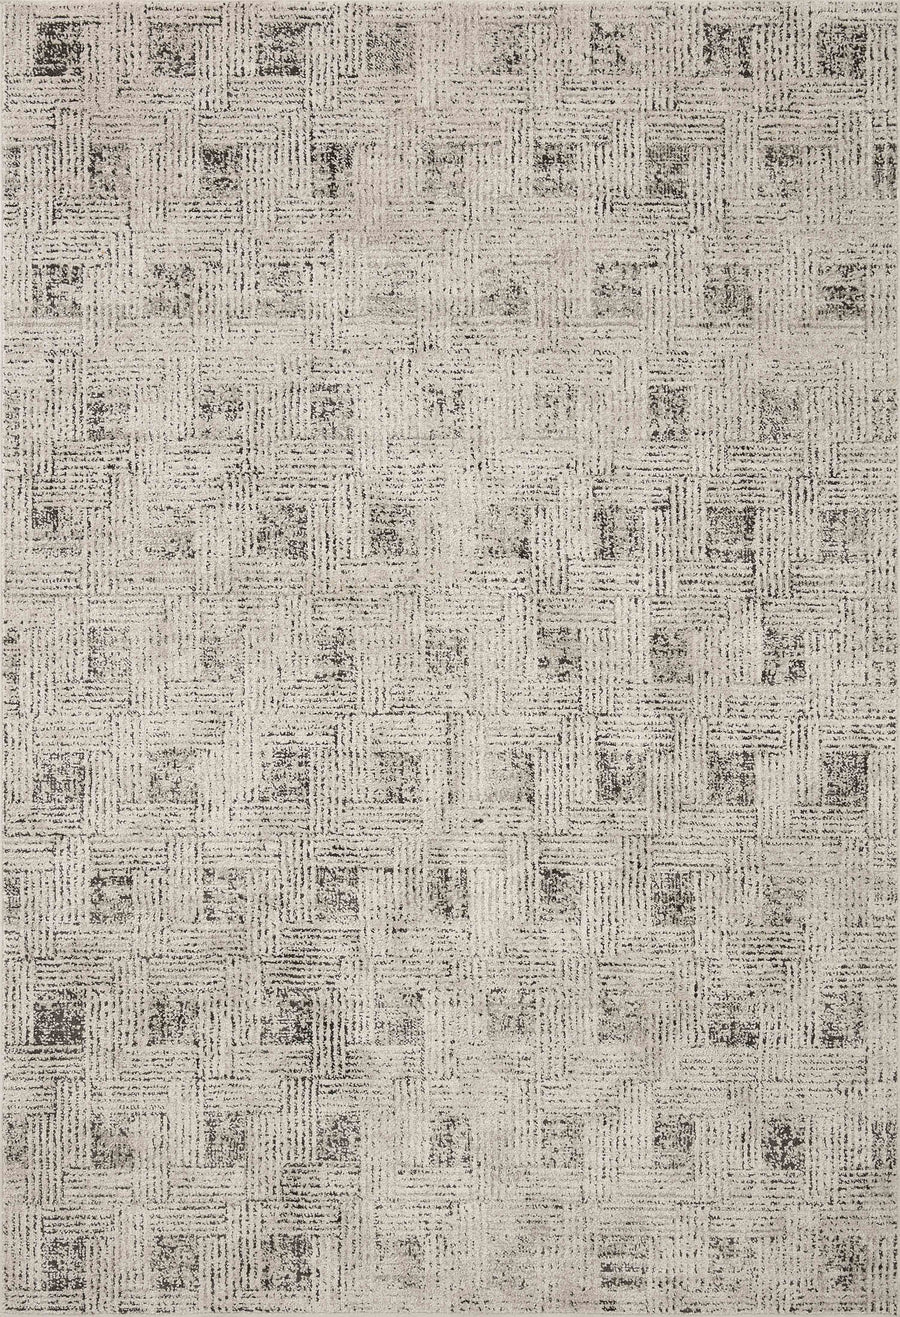 Loloi II Kamala Grey / Graphite 11'-2" x 15'-7" Area Rug